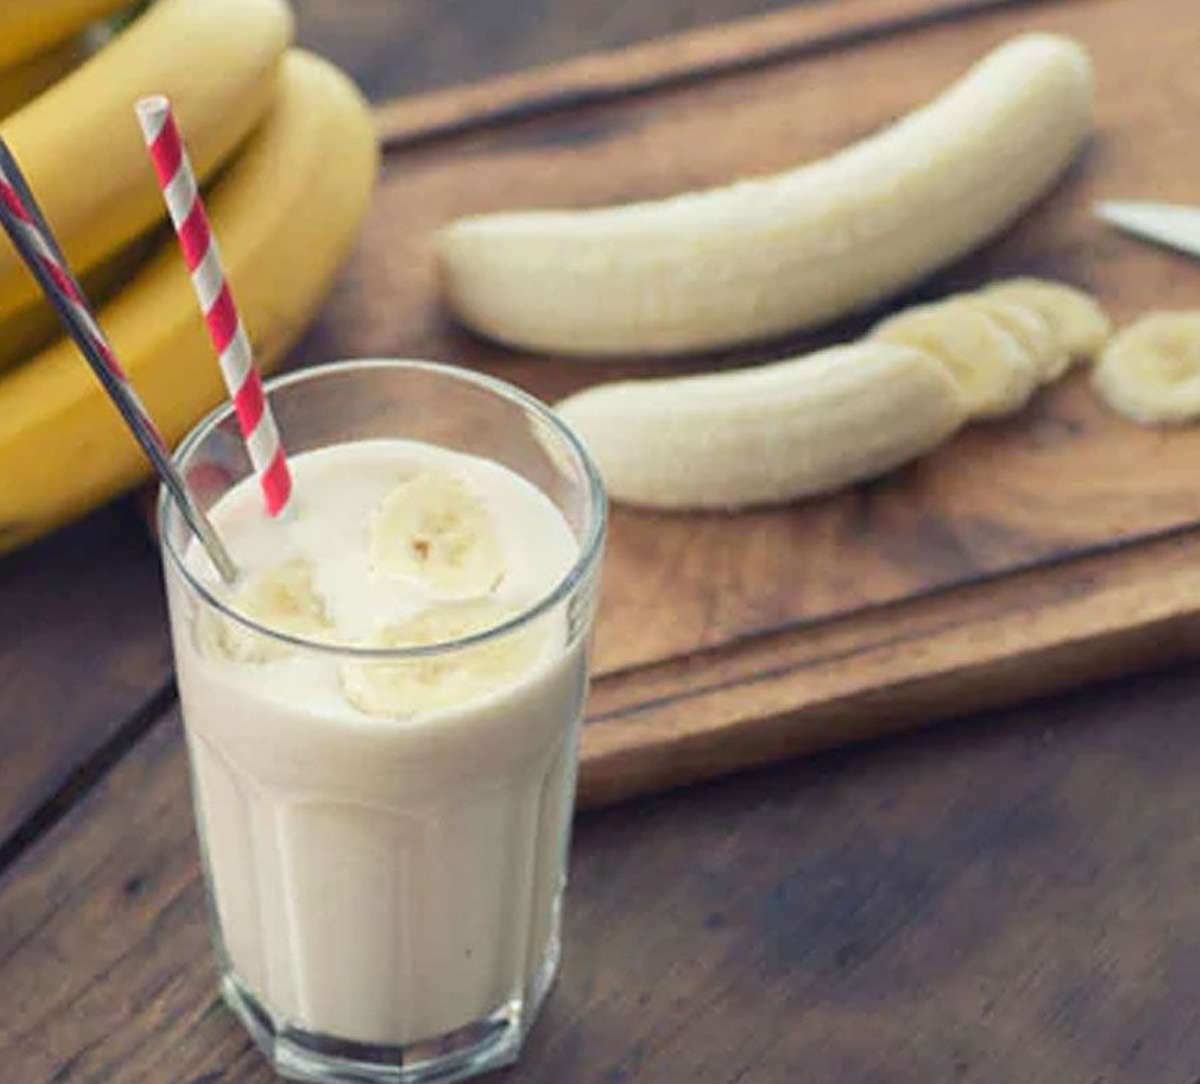 banana-and-milk-for-blood-sugar.jpg